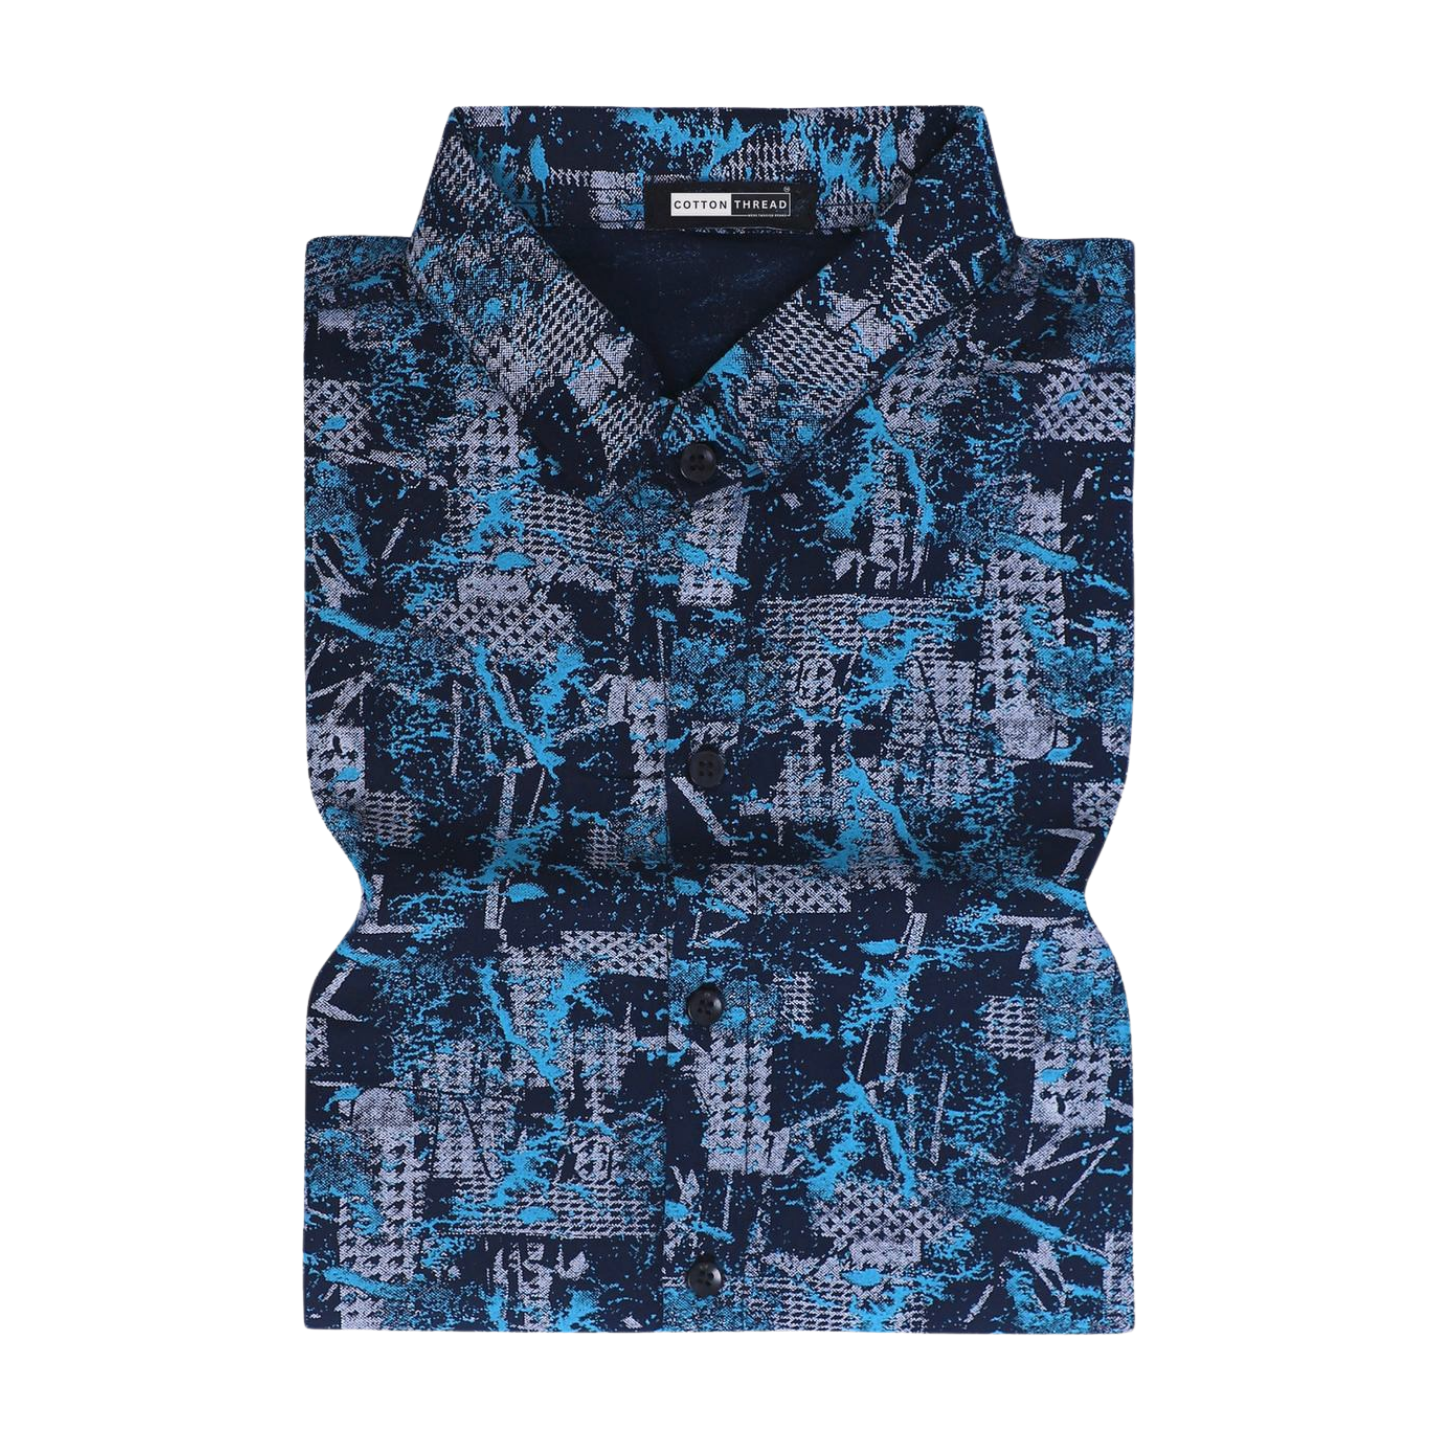 Men's Premium Cotton Half Sleeve Black Blue Printed Shirt By Cotton Thread (PRT-084)